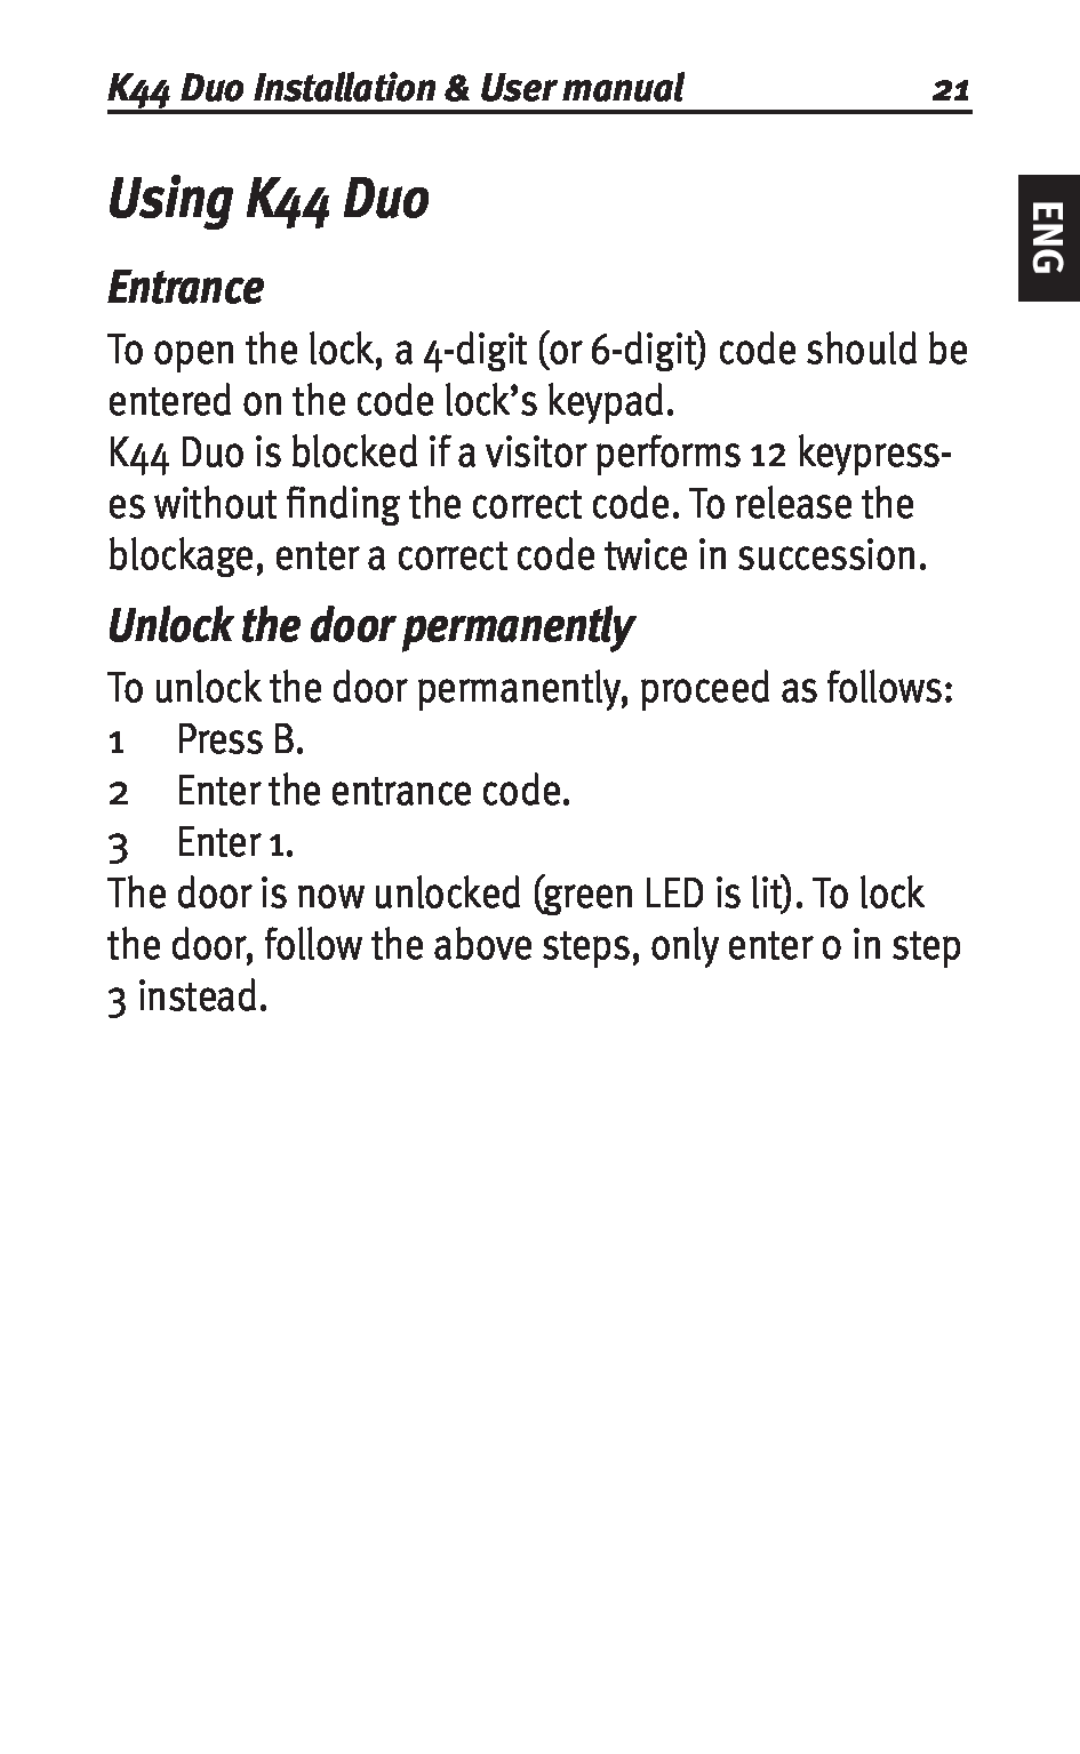 Siemens user manual Using K44 Duo, Entrance, Unlock the door permanently 